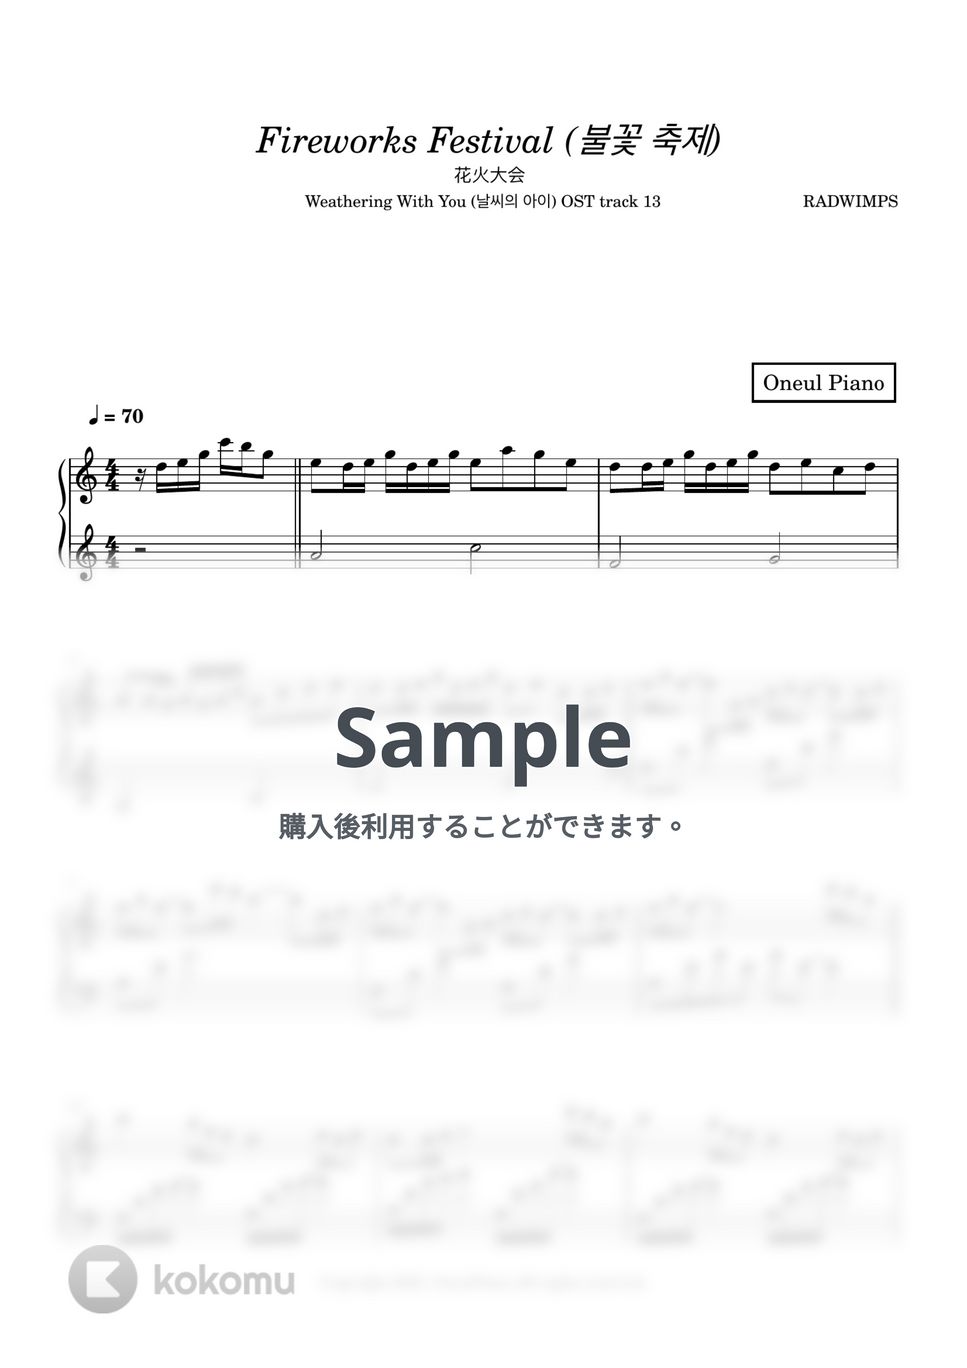 RADWIMPS - 花火大会 (Fireworks Festival) (天気の子 OST track 13) by 今日ピアノ(Oneul Piano)